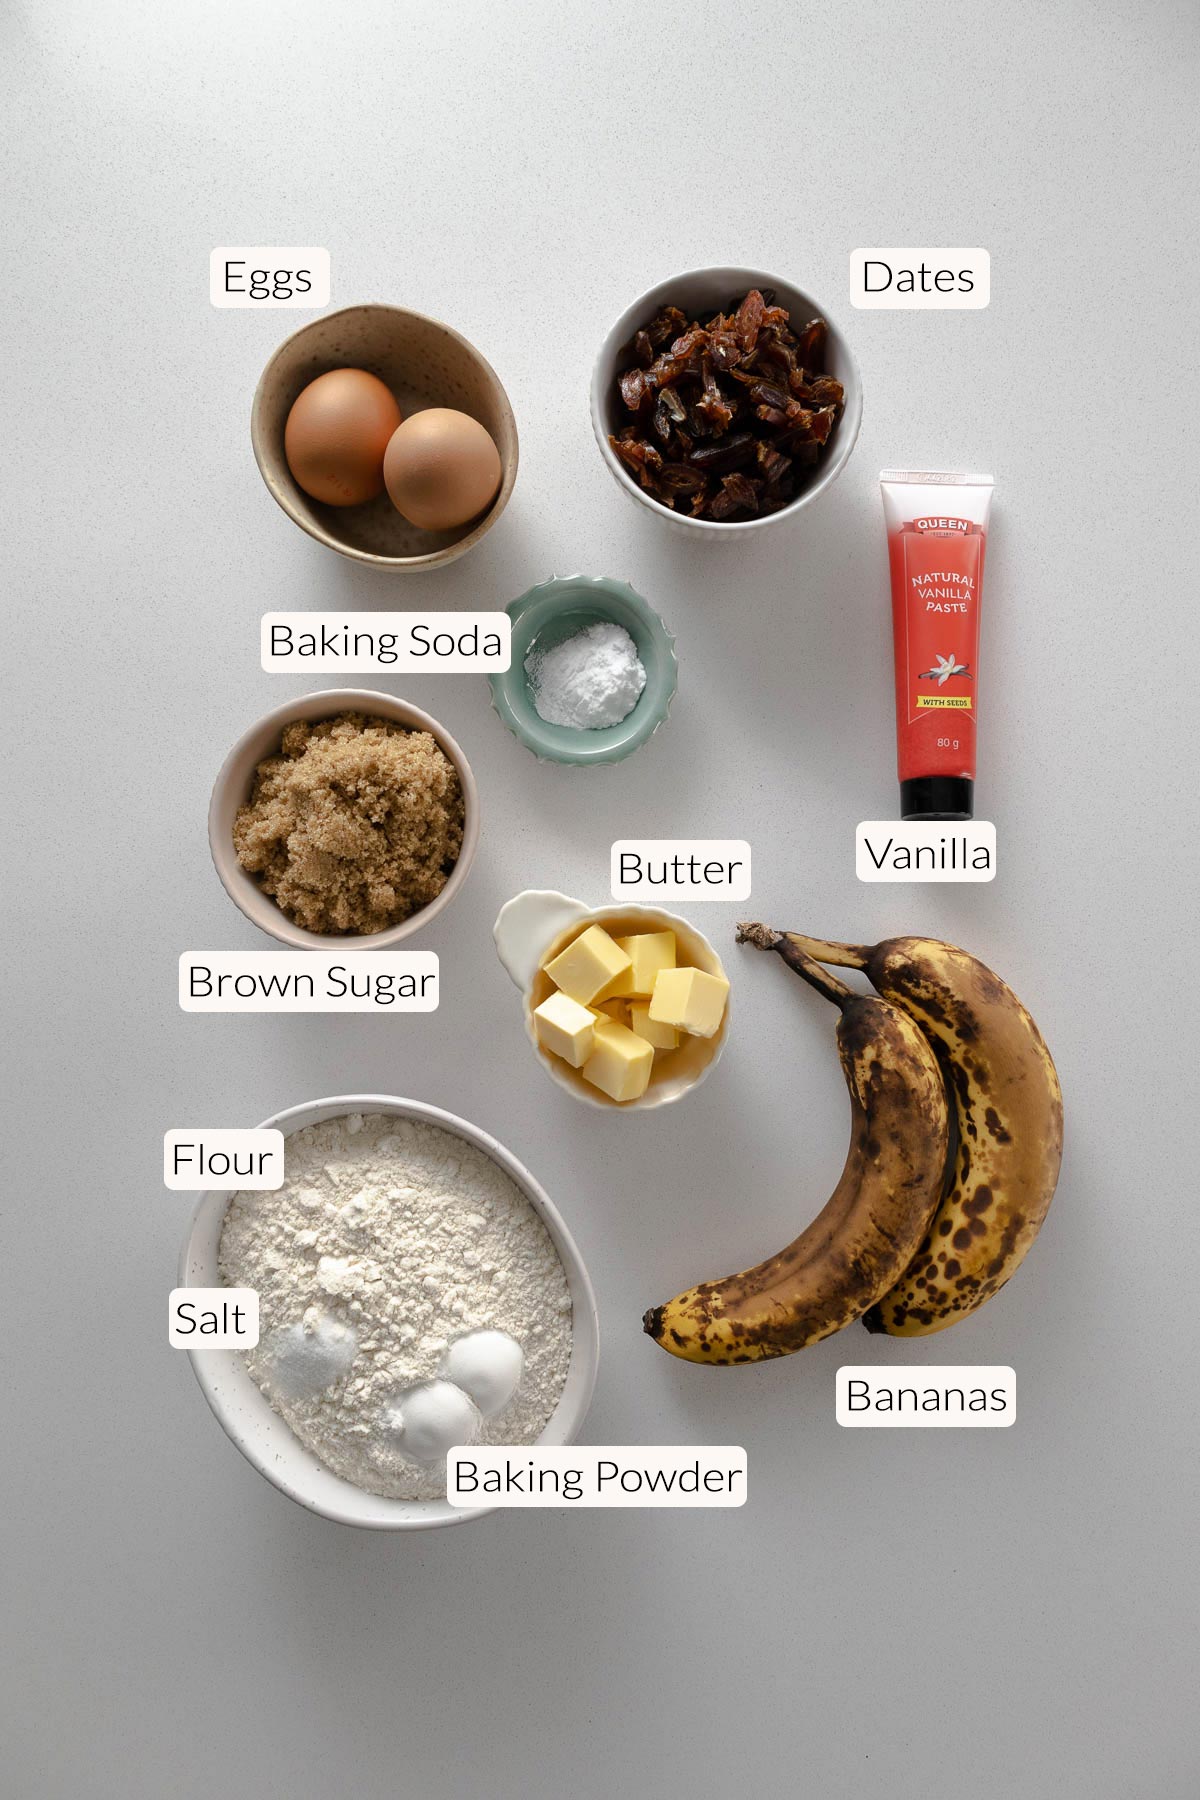 Banana Date Loaf Ingredients - bananas, dates, vanilla, butter, baking powder, baking soda, flour, brown sugar, eggs.